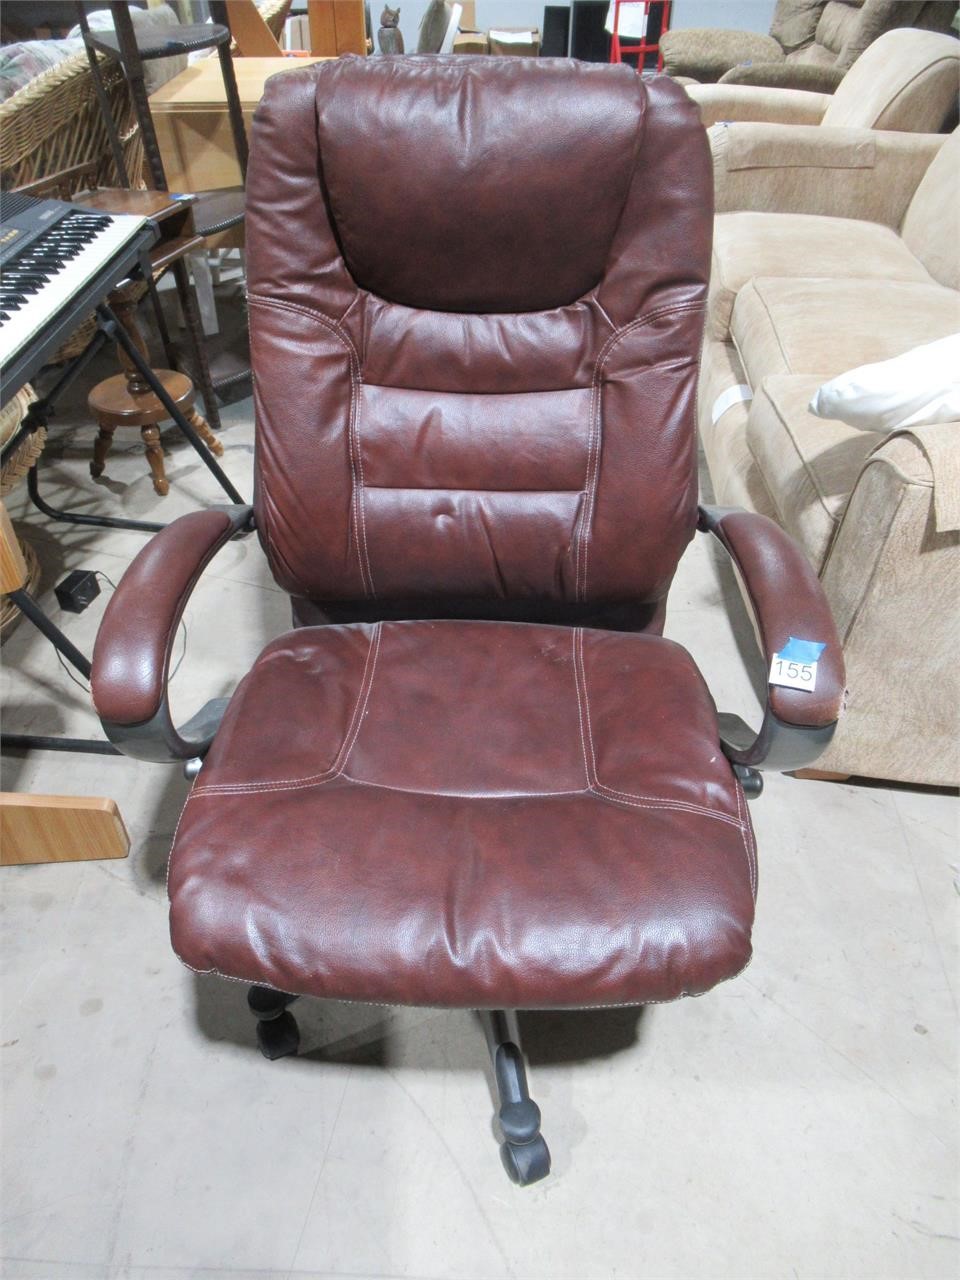 worn leather like computer chair